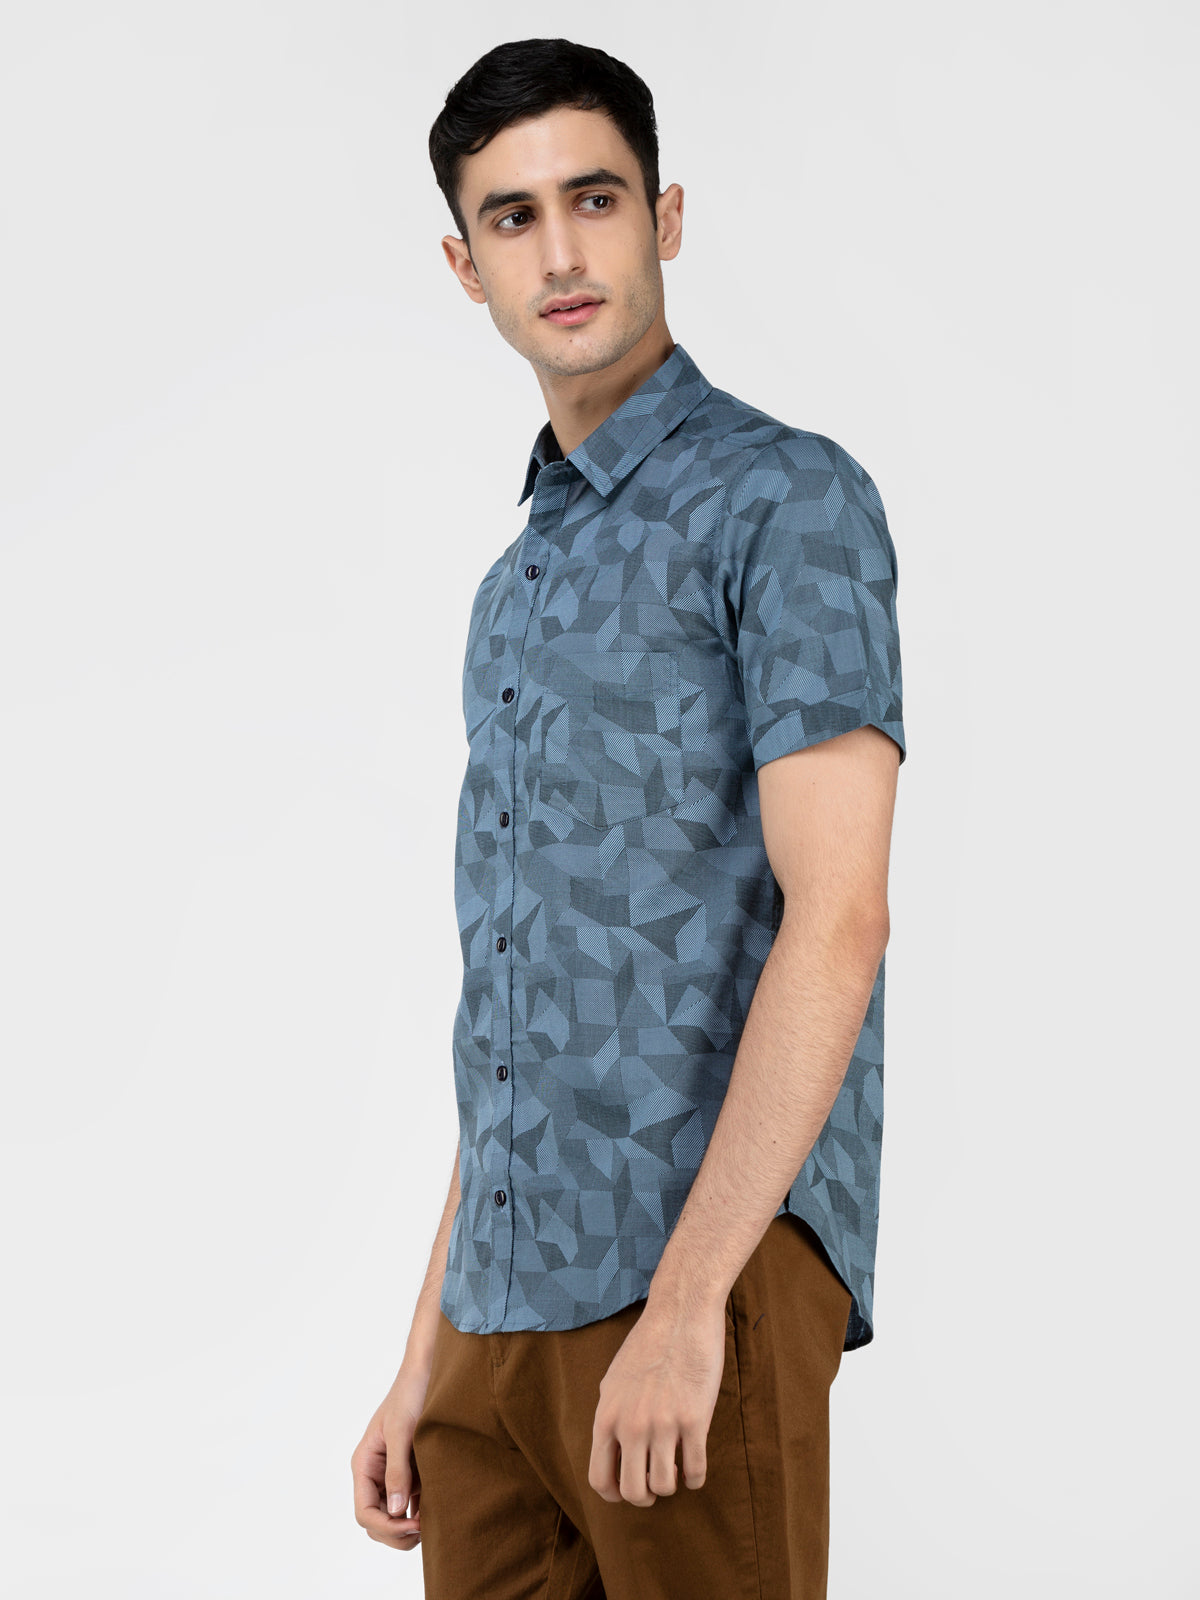 Lazy panda Geometric abstraction printed blue shirt